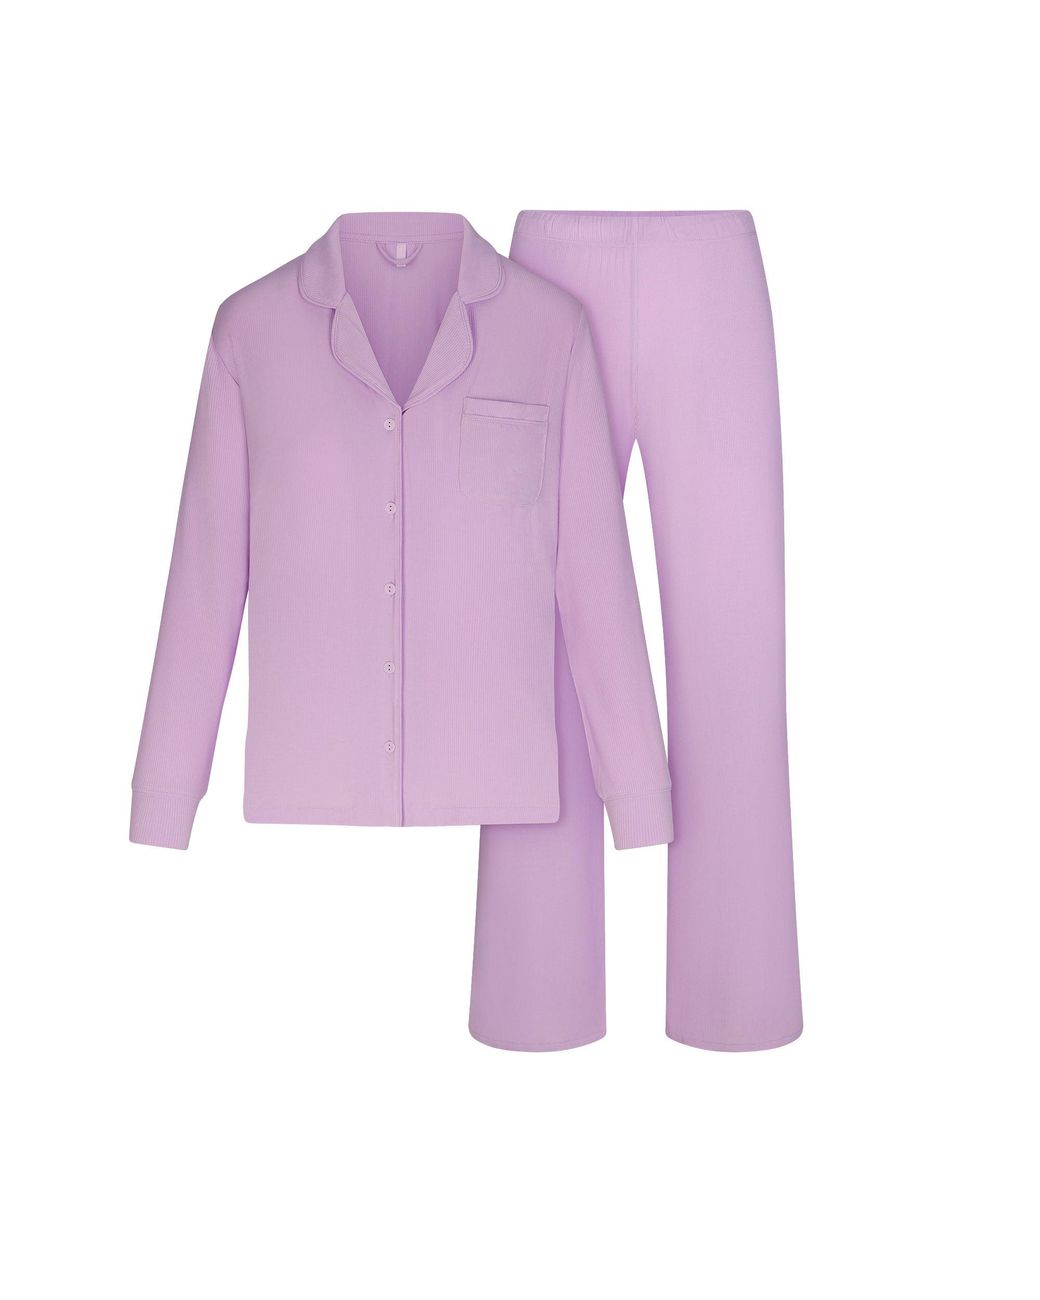 Skims Sleep Long Sleeve Button Up Set in Purple